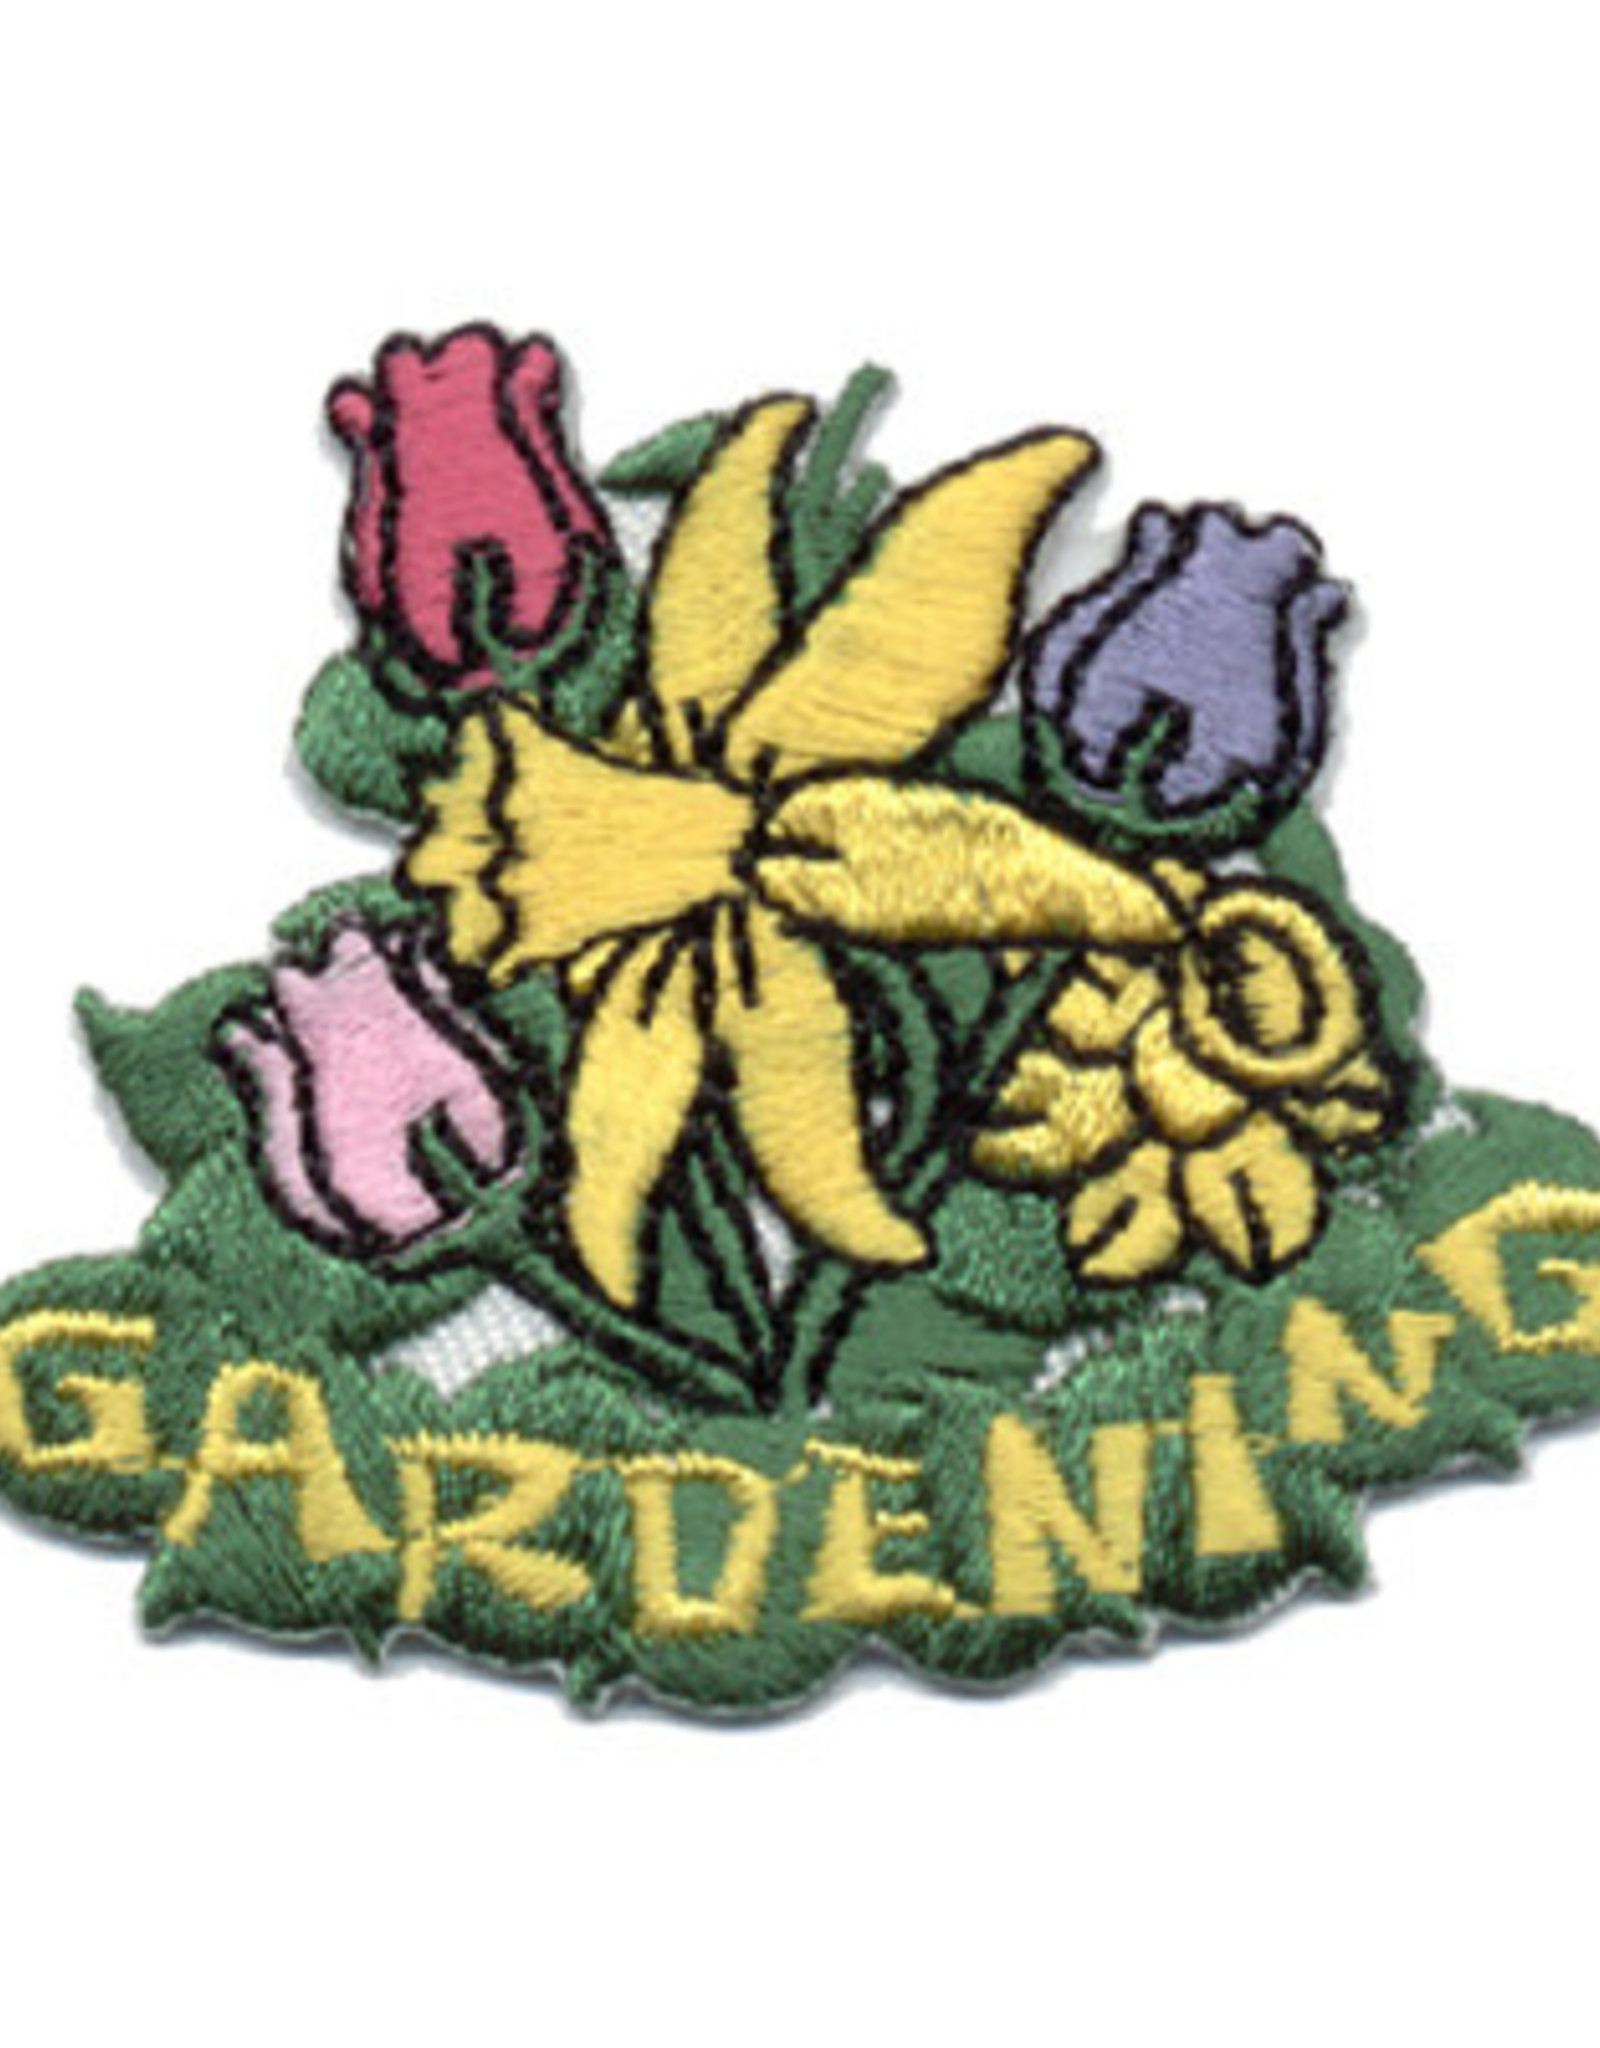 Advantage Emblem & Screen Prnt Gardening Fun Patch